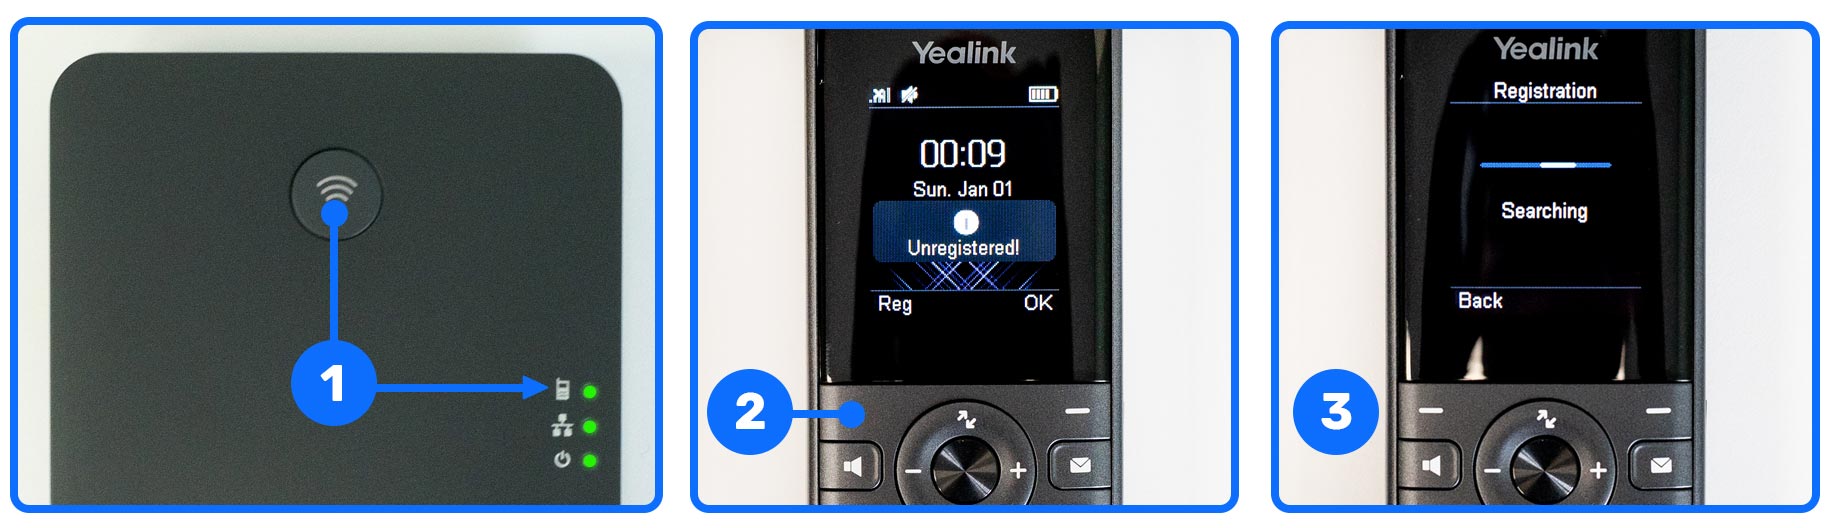 Yealink W73P VoIP Phone pairing additional handset